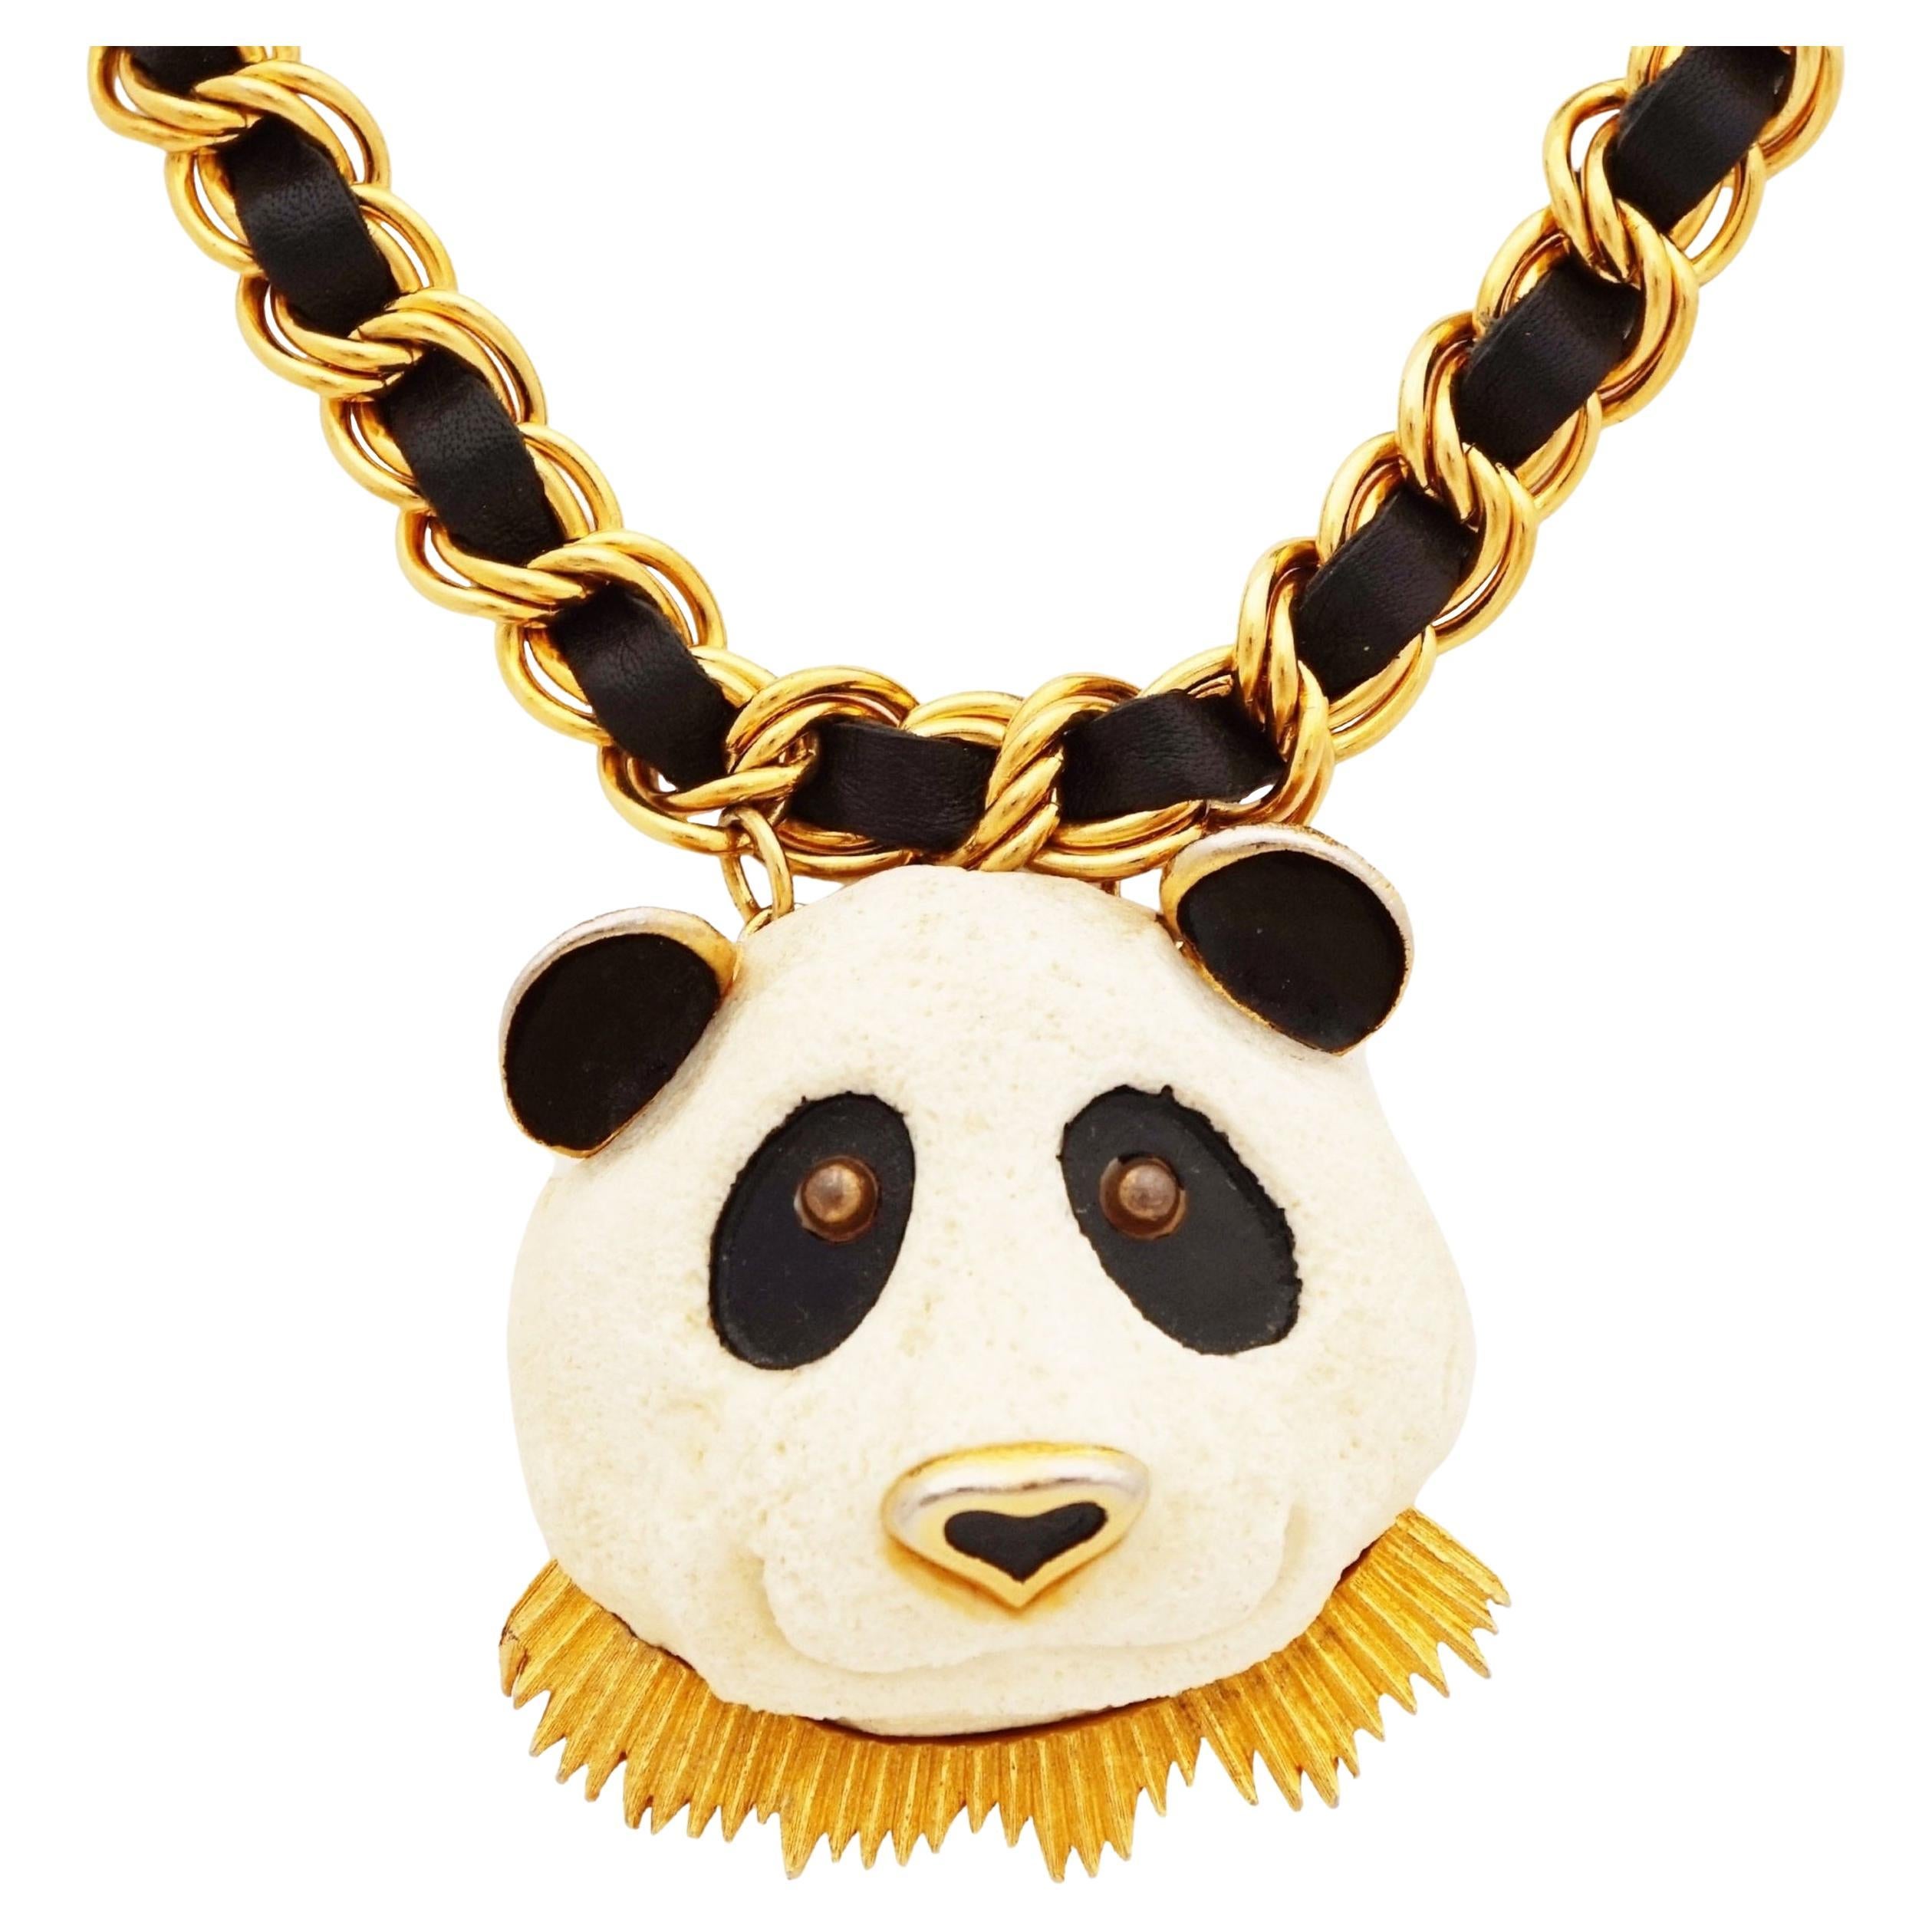 Buy Panda Necklace Panda Bear Necklace Panda Jewelry Animal Jewelry Chinese Necklace  Panda Gift Panda Charm Necklace Panda Pendant Necklace Online in India -  Etsy